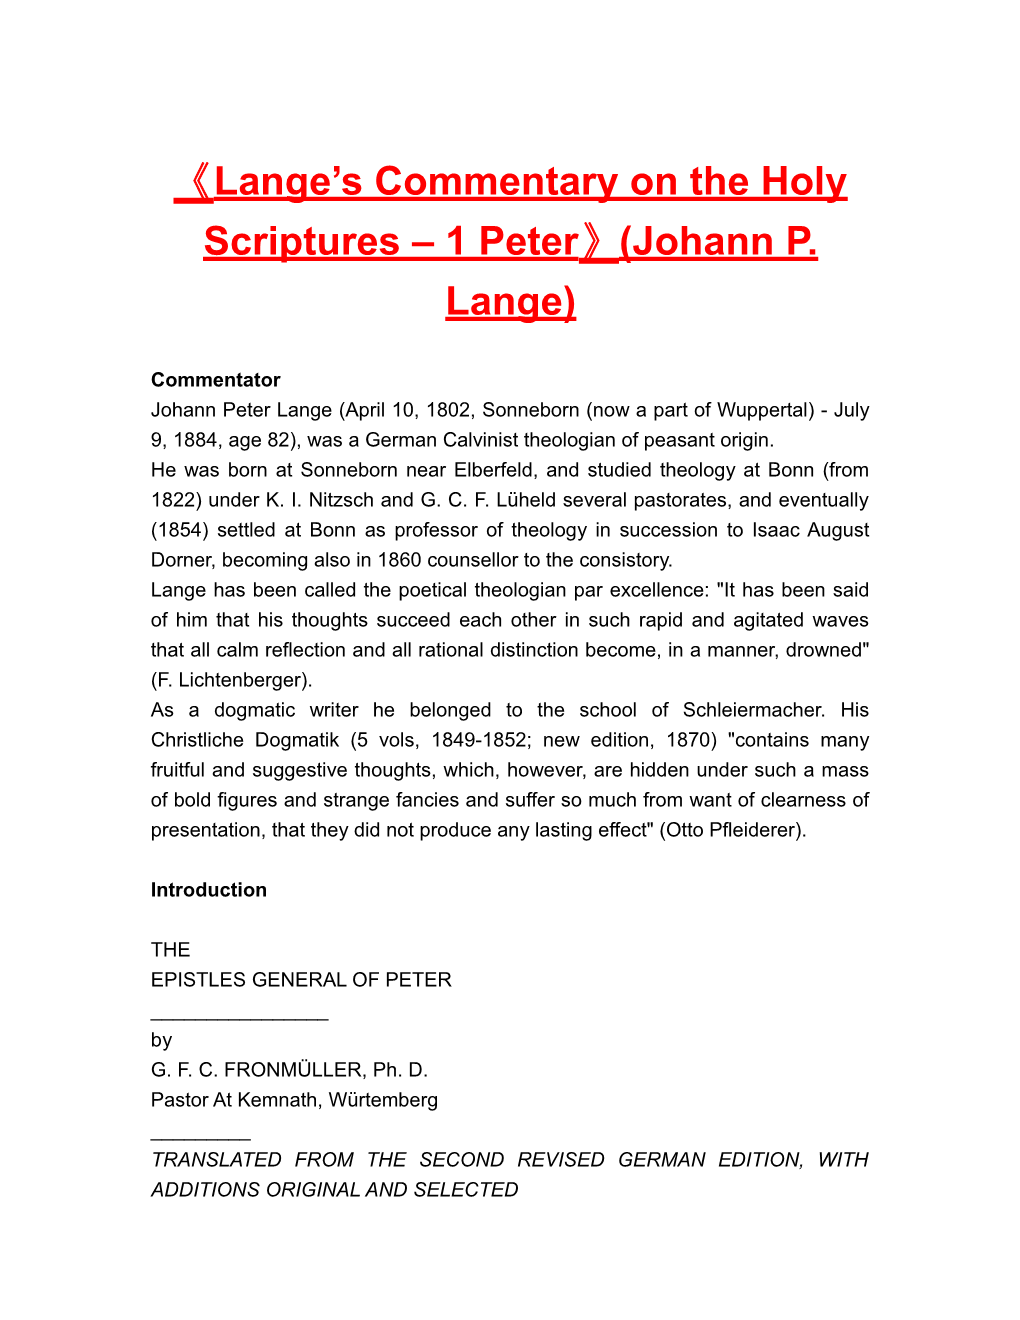 Lange S Commentary on the Holy Scriptures 1 Peter (Johann P. Lange)